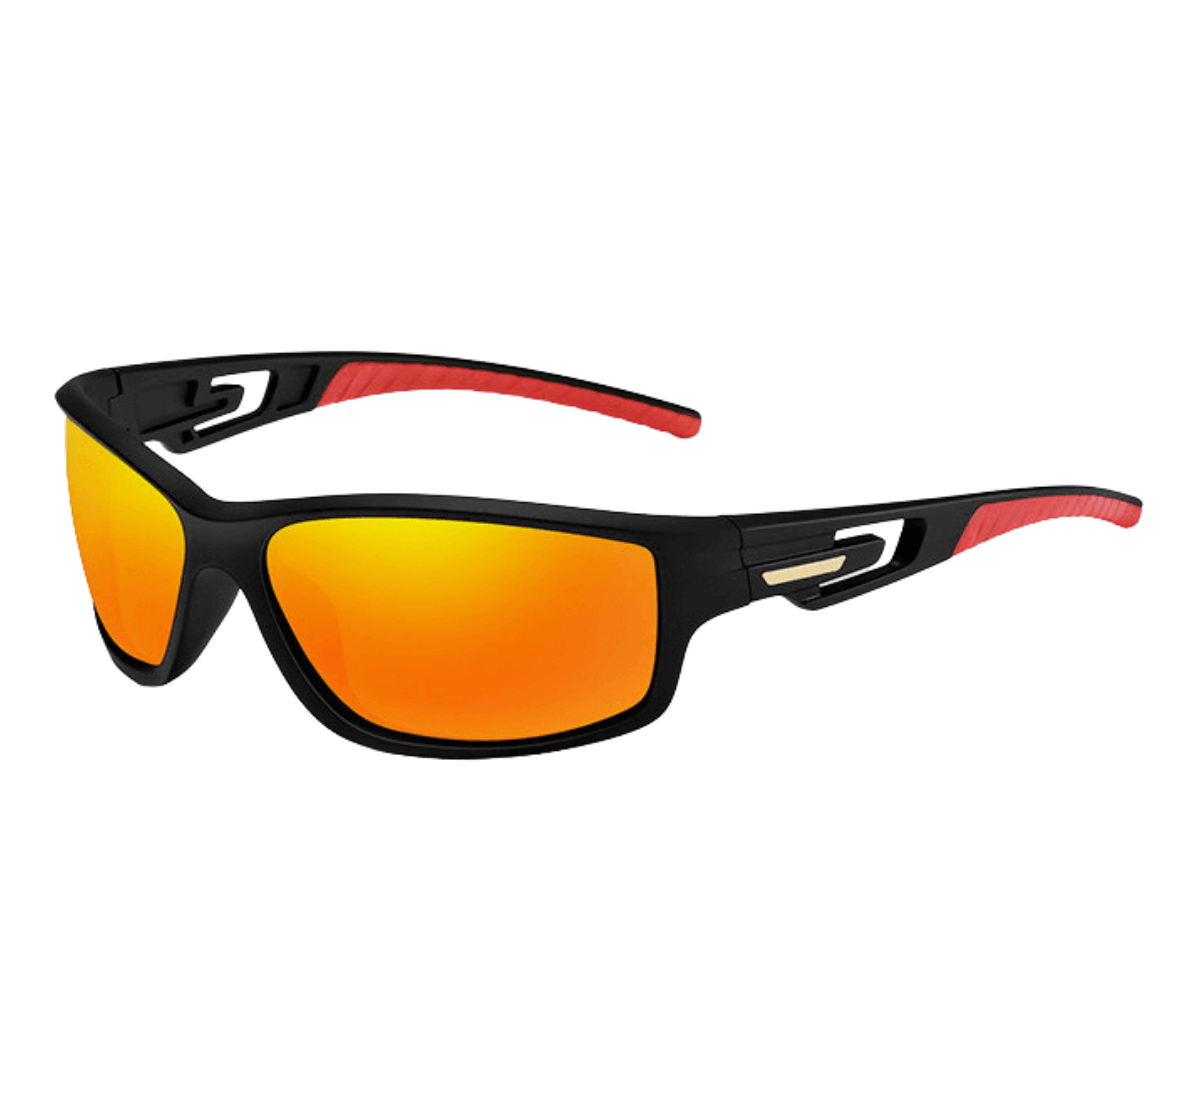 polarized wholesale sunglasses, red polarized sport sunglasses wholesale, bulk polarized sunglasses, sunglasses factory in China